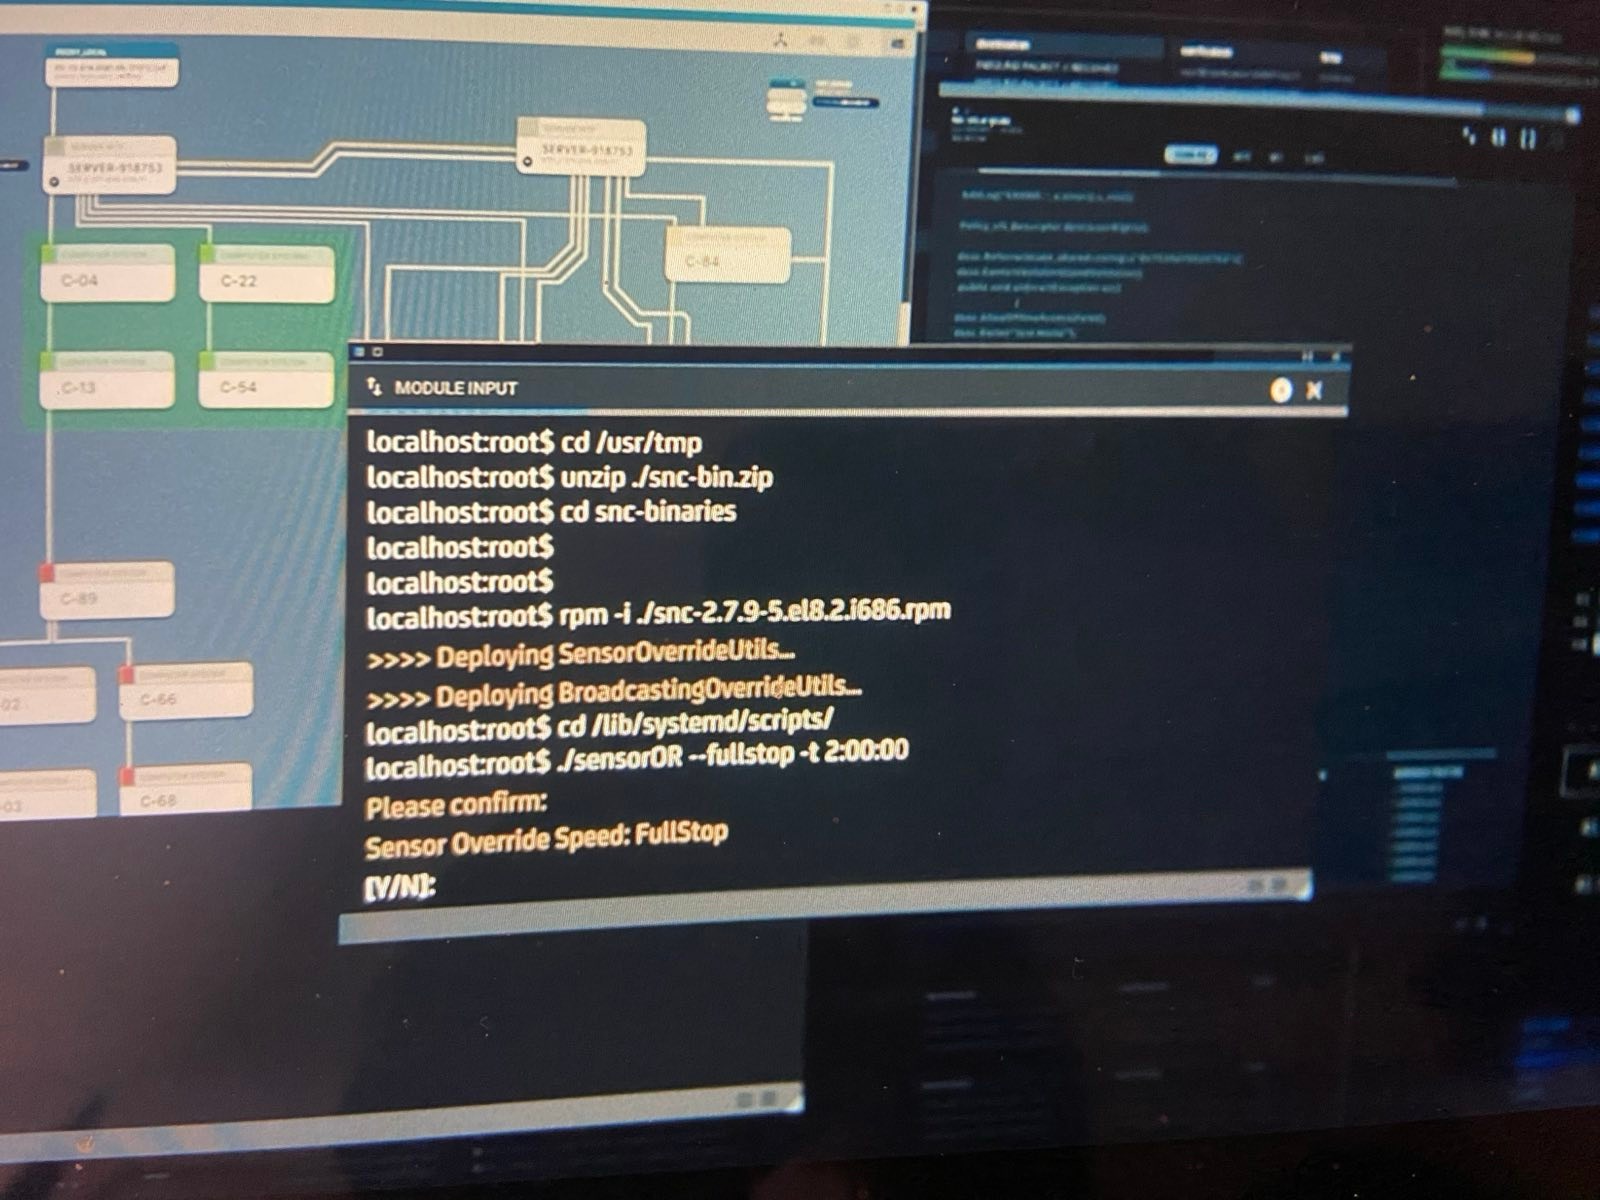 Screen design showing a terminal